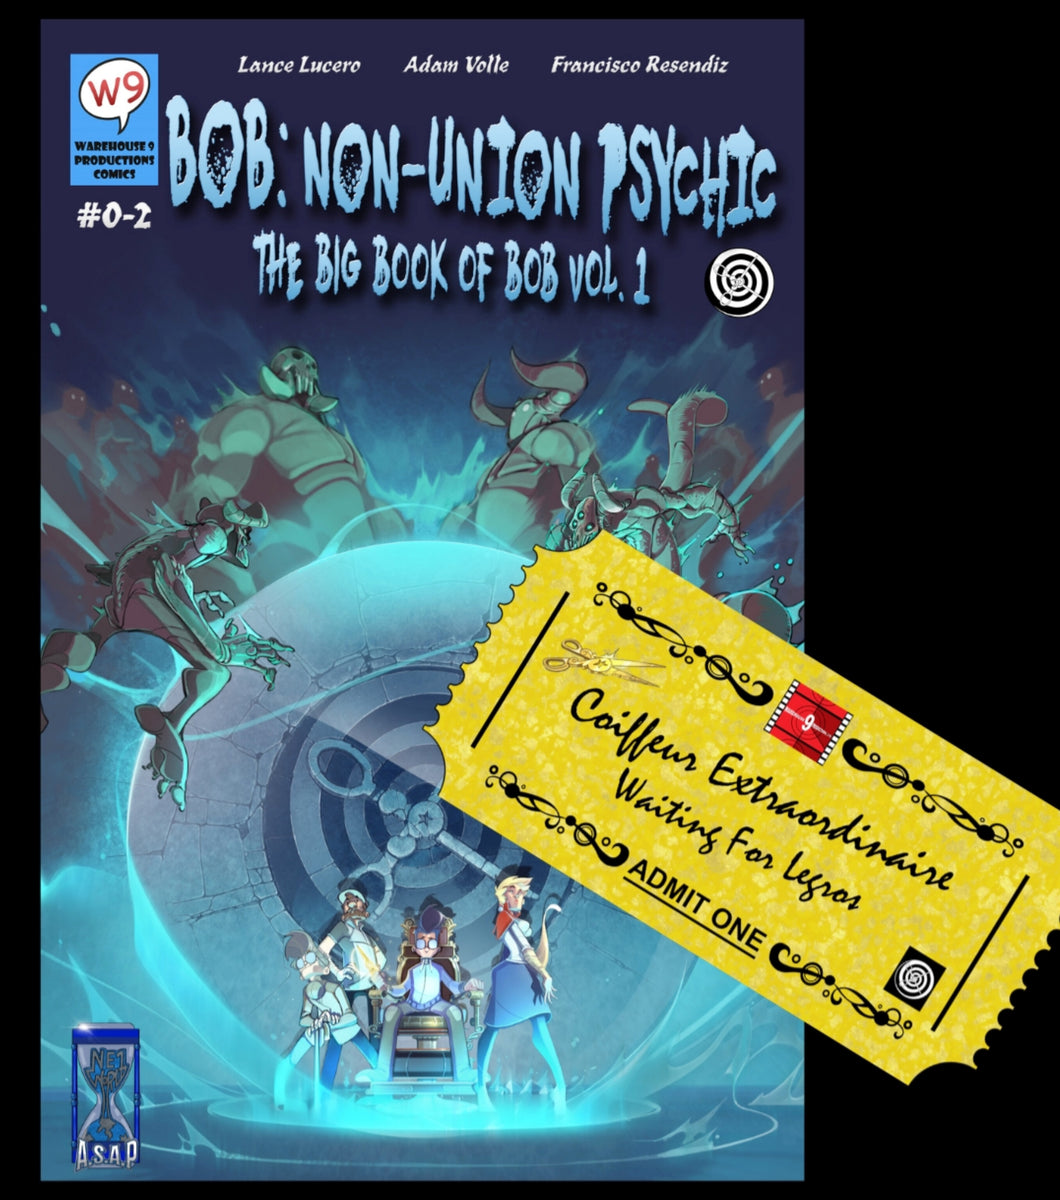 SIGNED PAPERBACK COPIES! BOB: NON-UNION PSYCHIC THE BIG BOOK OF BOB VOL.1